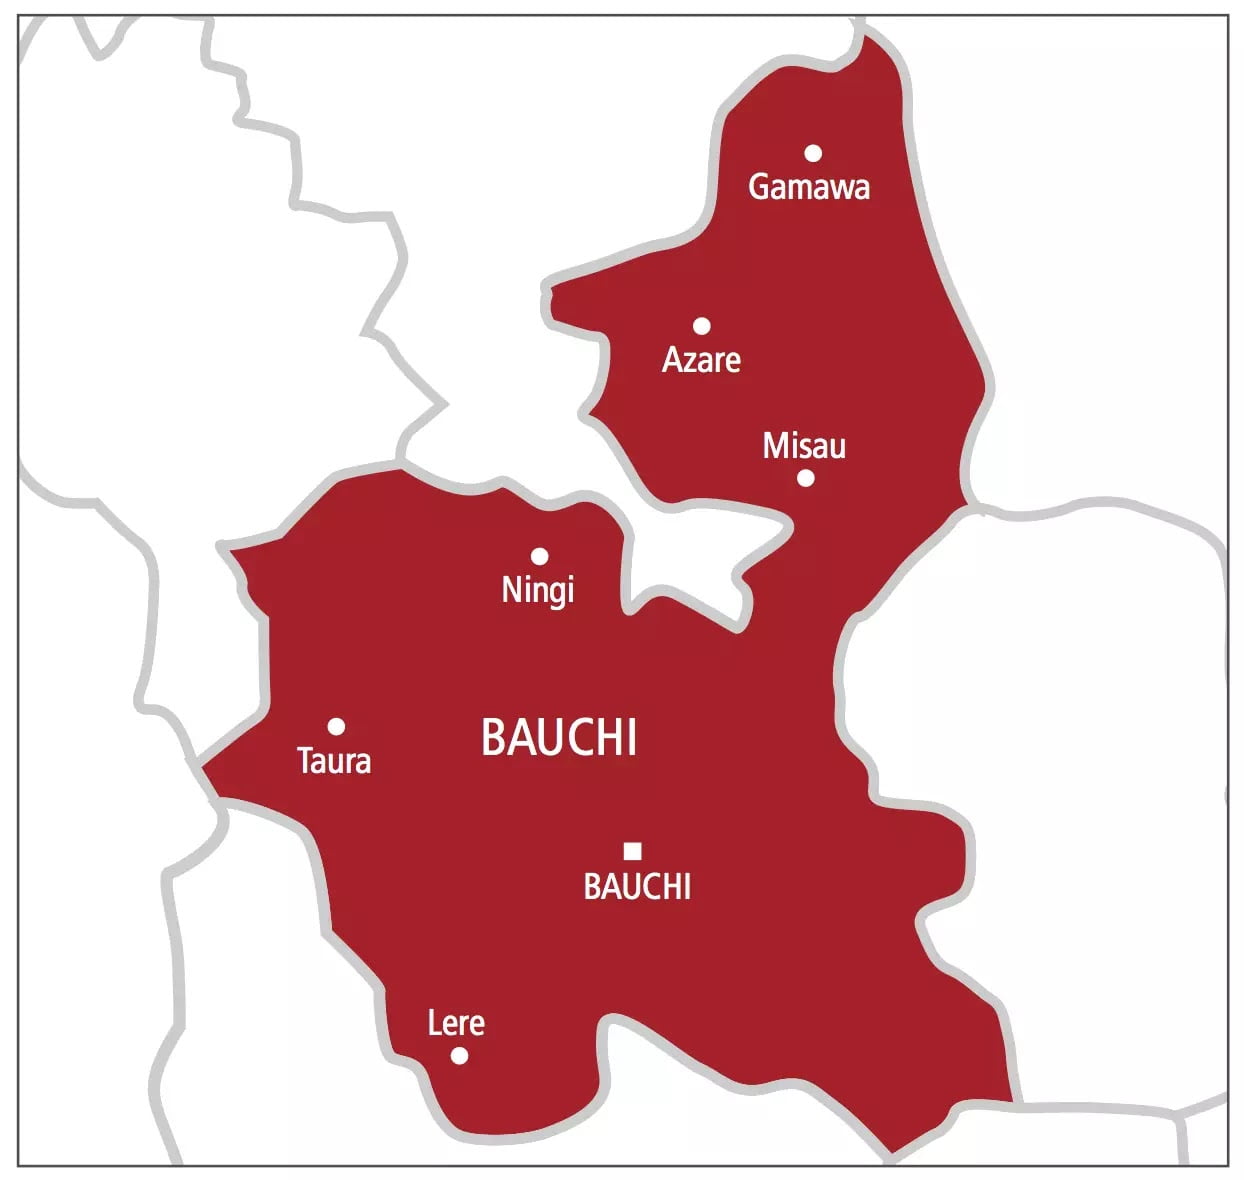 One dies, many injured in Bauchi accident